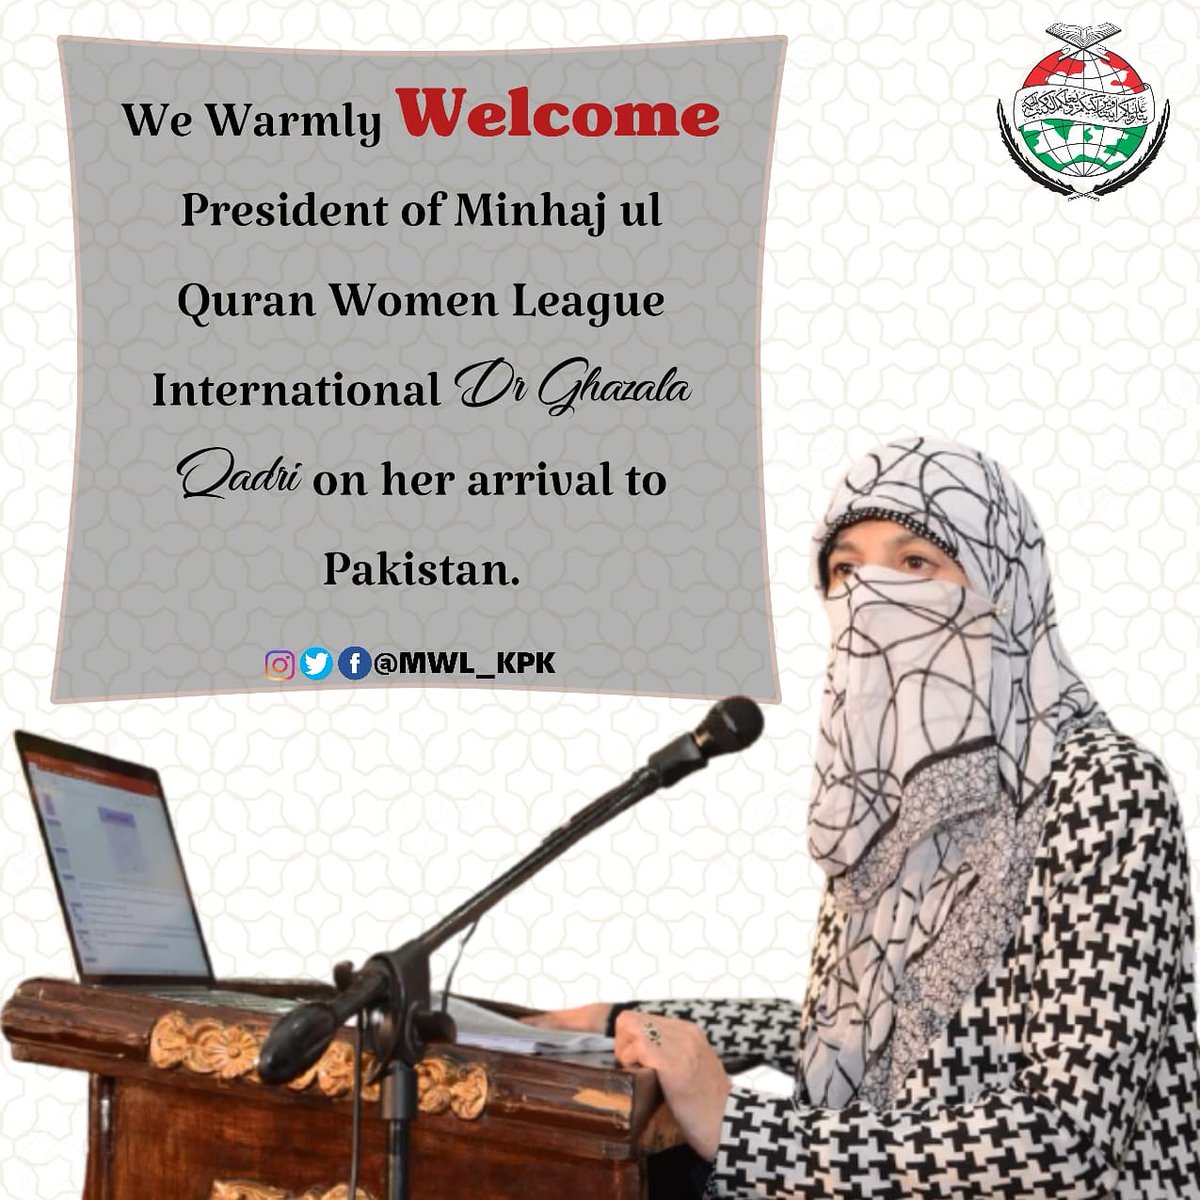 We warmly #Welcome to President of Minhaj ul Quran Women League international Dr Ghazala Qadri on her arrival to Pakistan.

#DrGhazalaQadri #MWL_Hazara #MWL_KPK #WelcomToPakistan